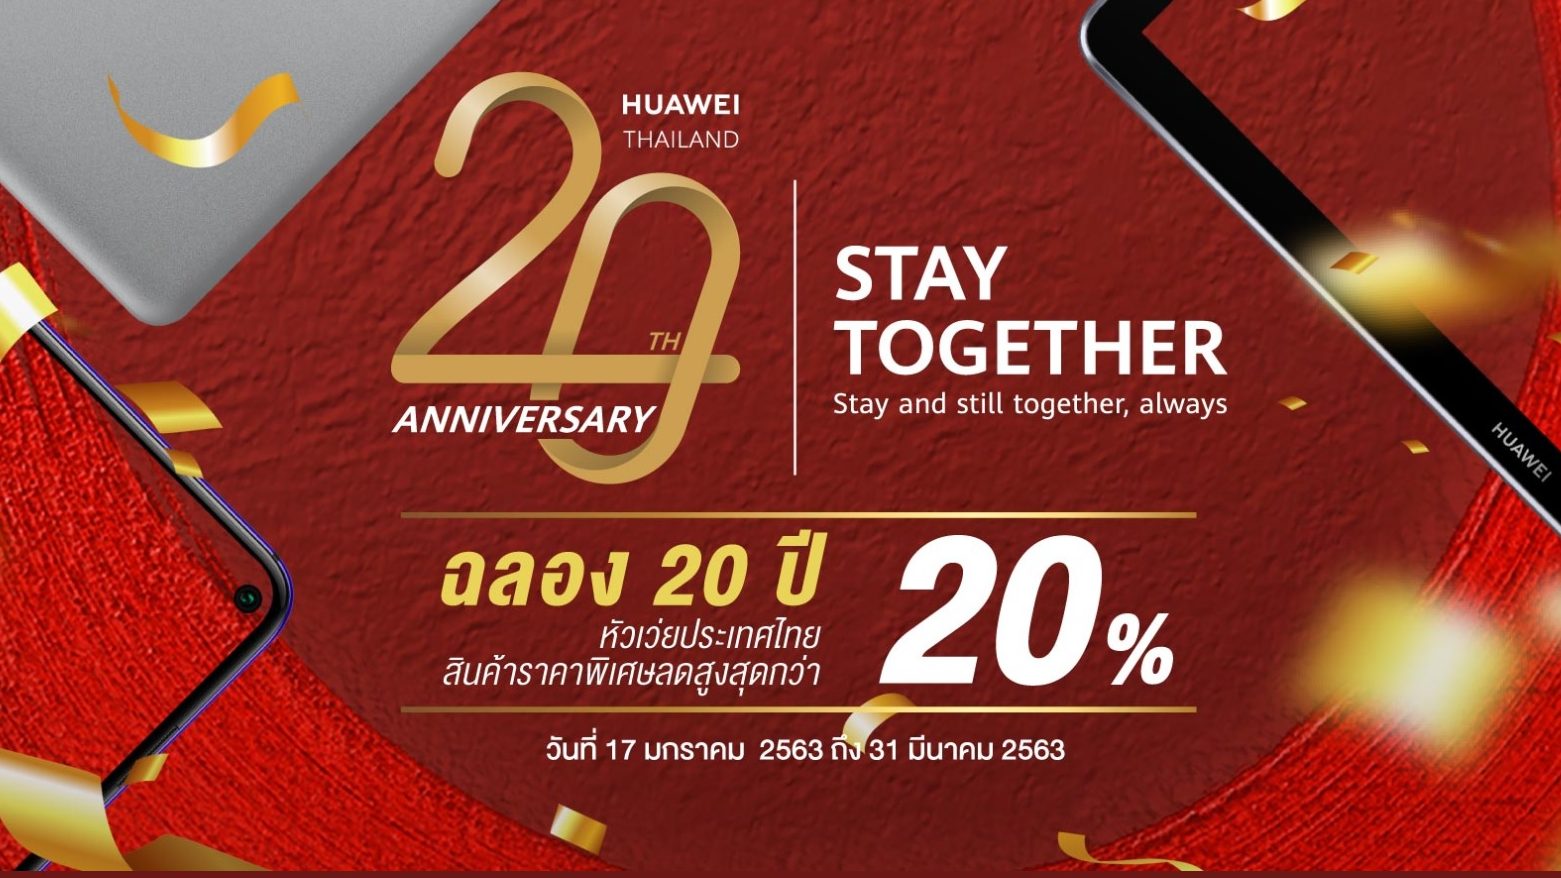 Huawei ประเทศไทย ฉลองครบรอบ 20 ปี  จัดโปรแทนคำขอบคุณลูกค้า ในแคมเปญ “Huawei Thailand 20th Anniversary”